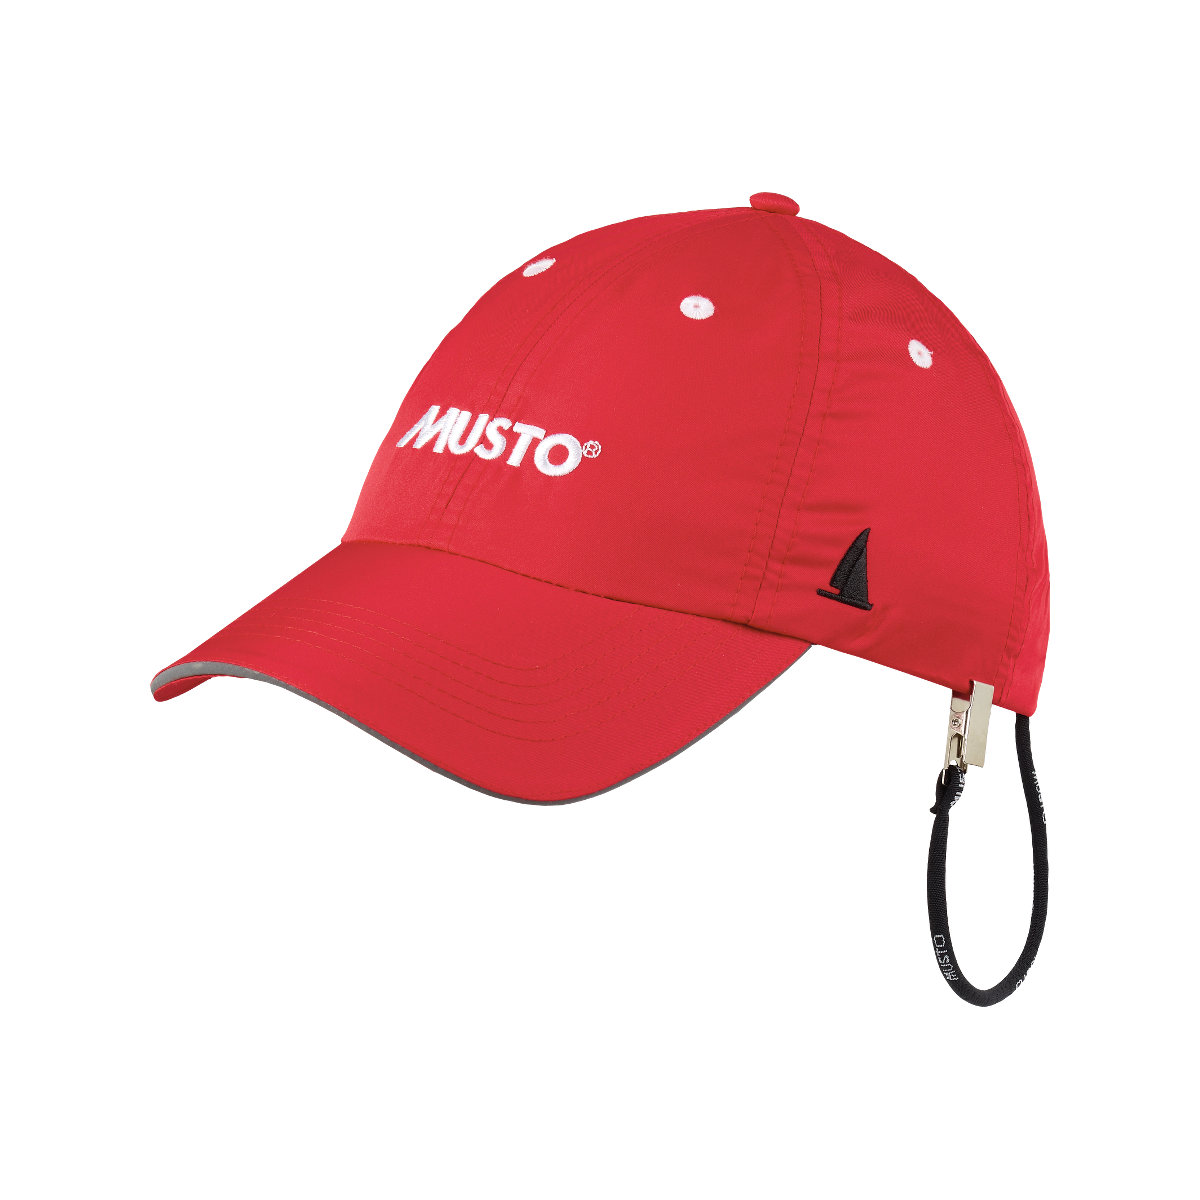 Musto Evo Fast Dry casquette voile rouge